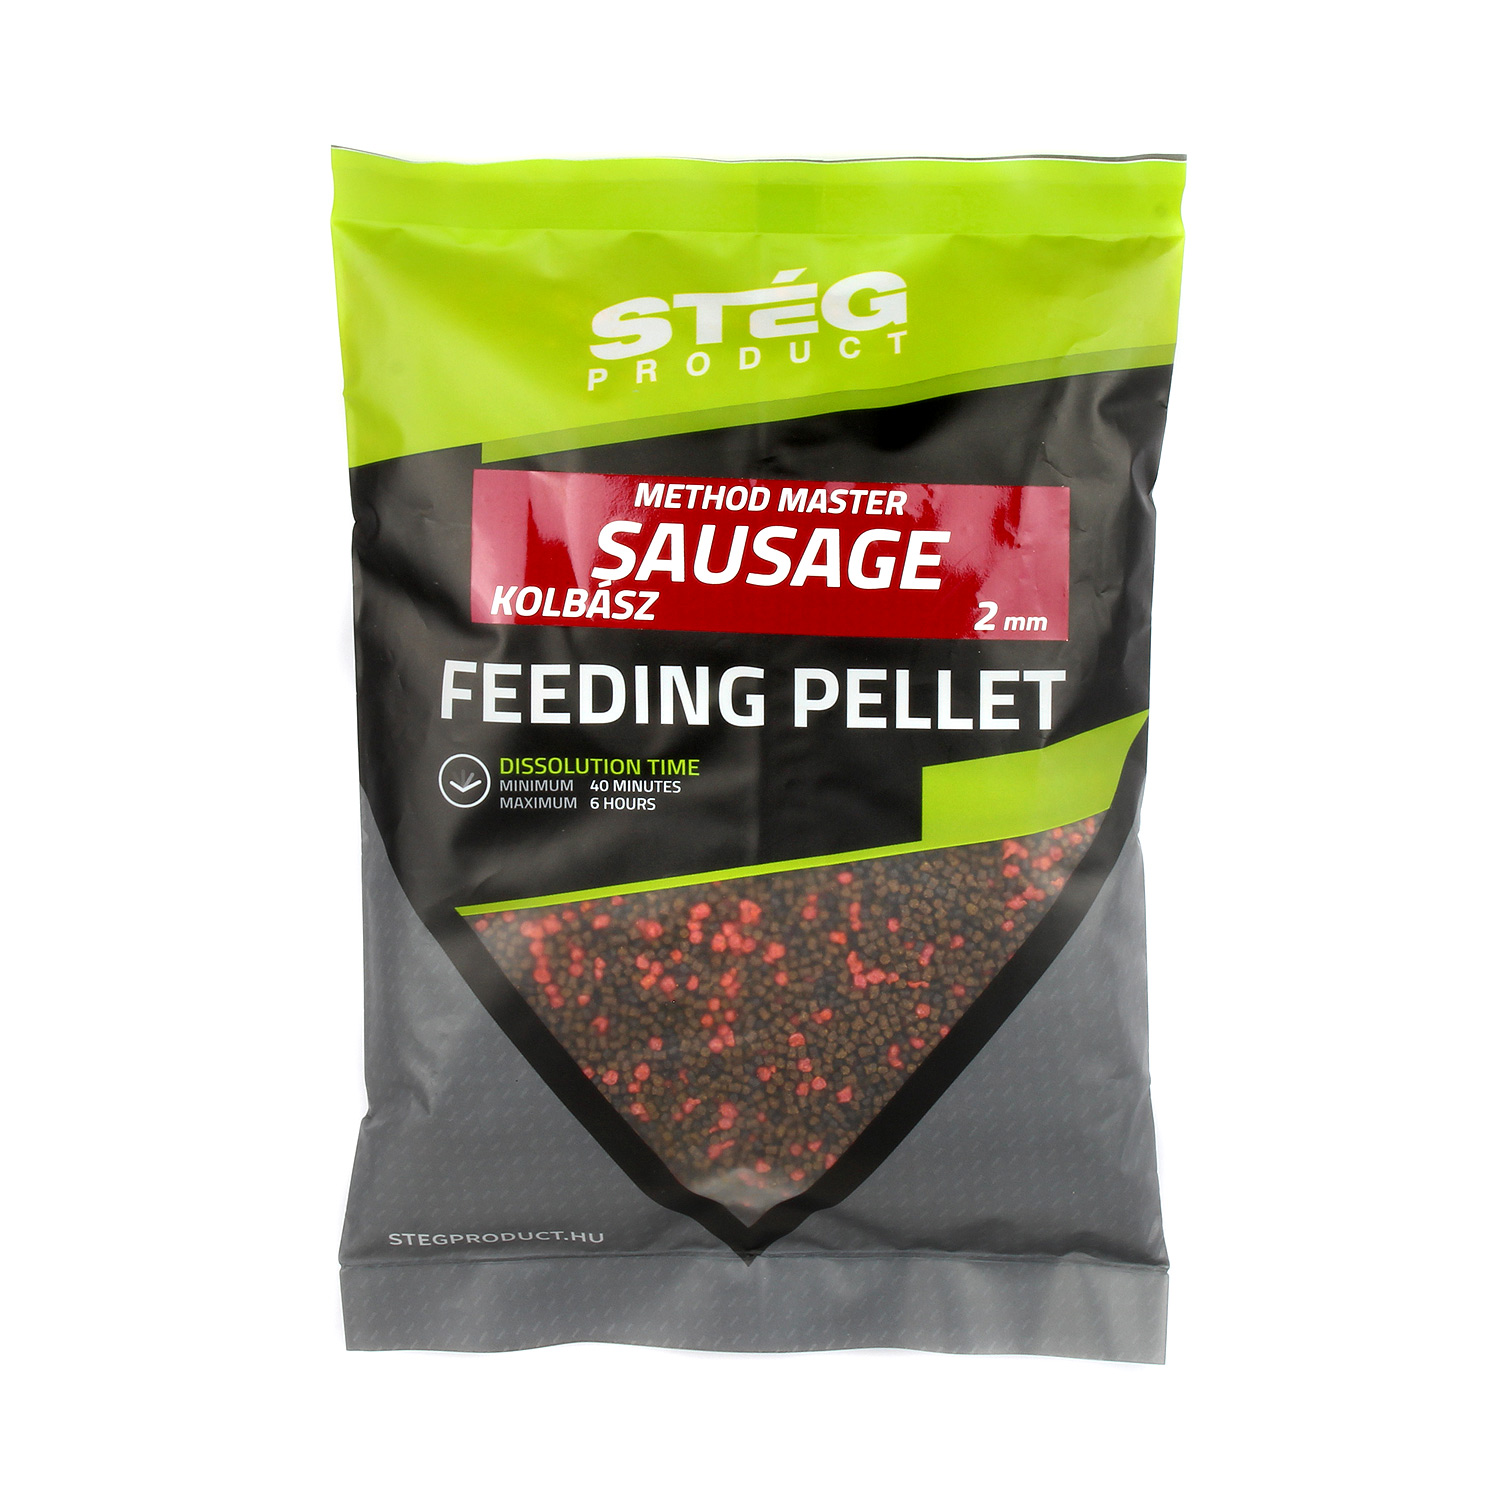 Stg Feeding Pellet 2mm Sausage 800g